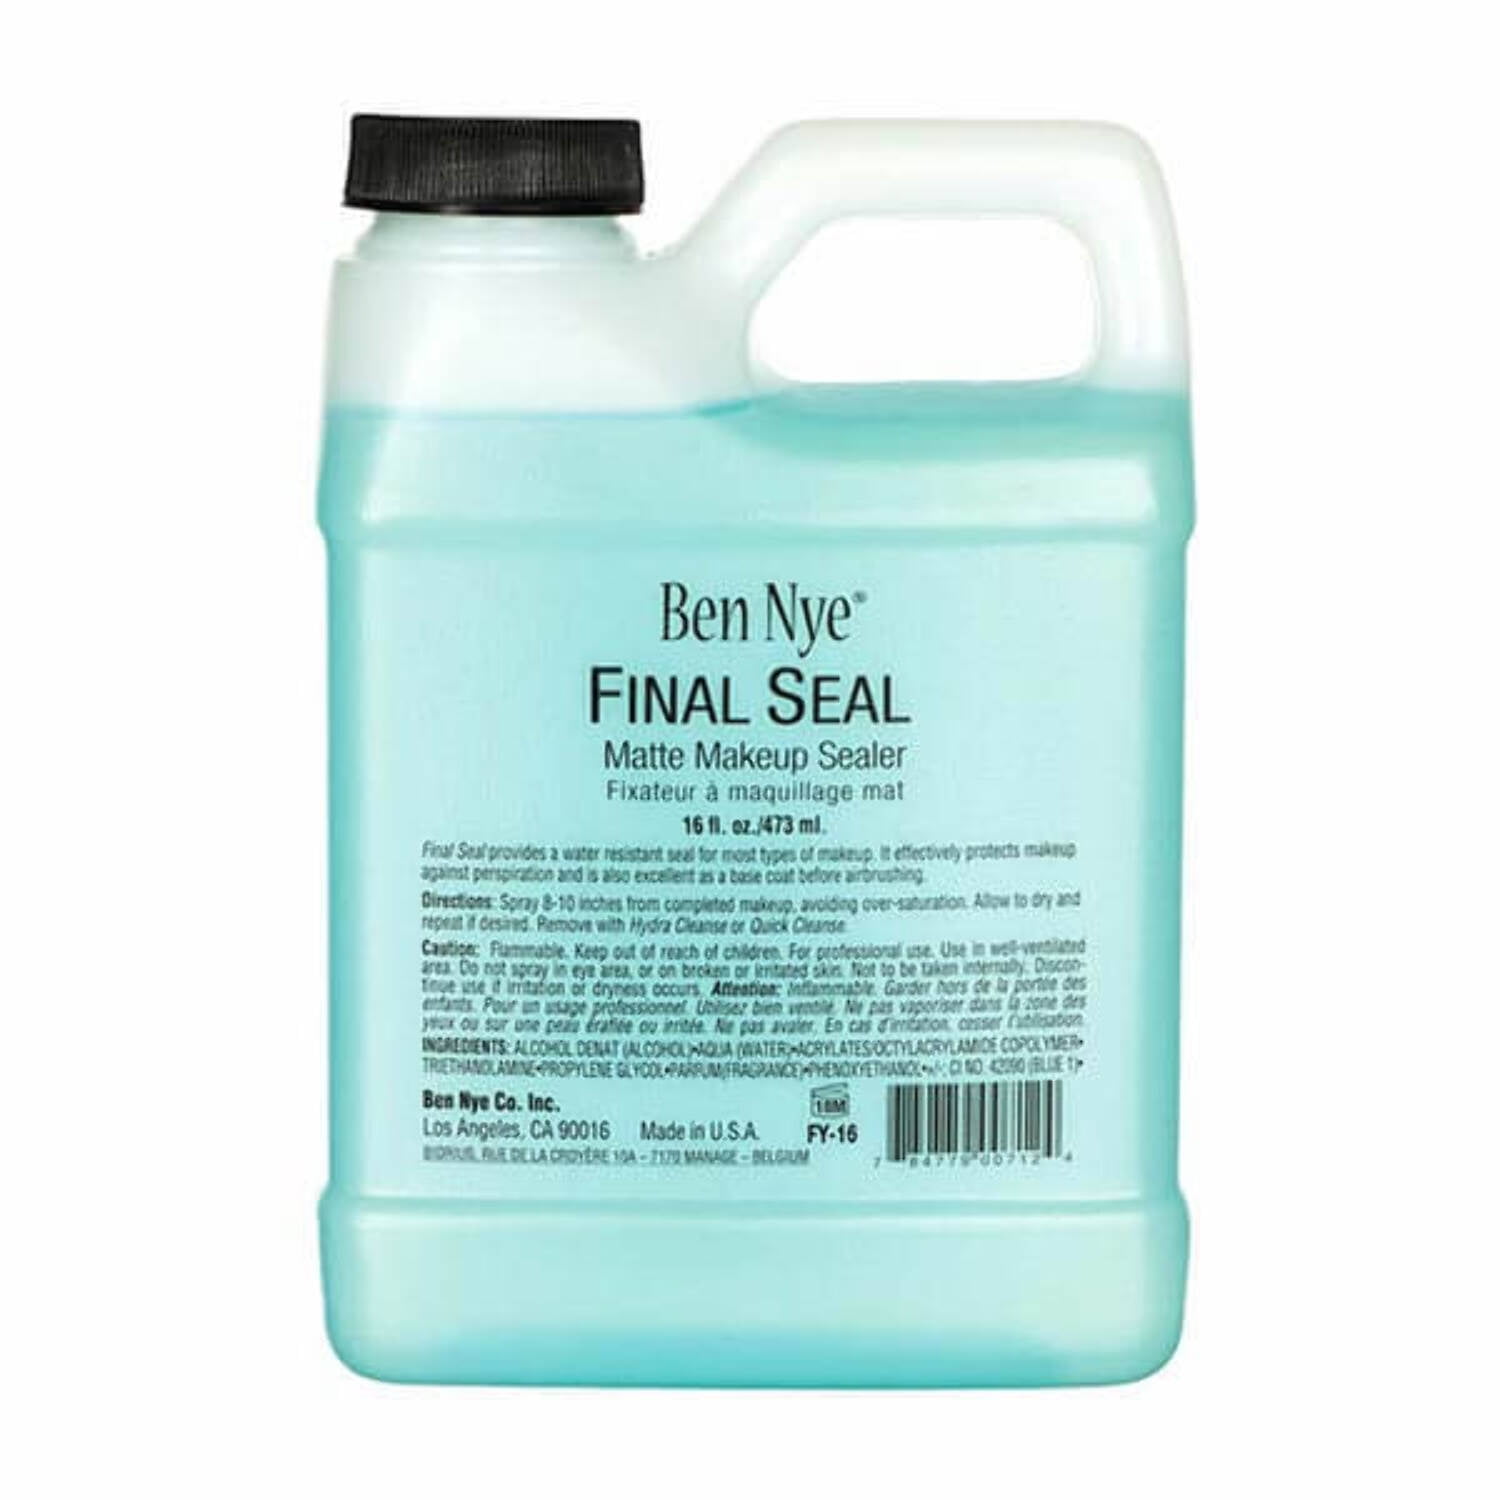 Ben Nye Final Seal Spray: Oily Skin Wear Test 